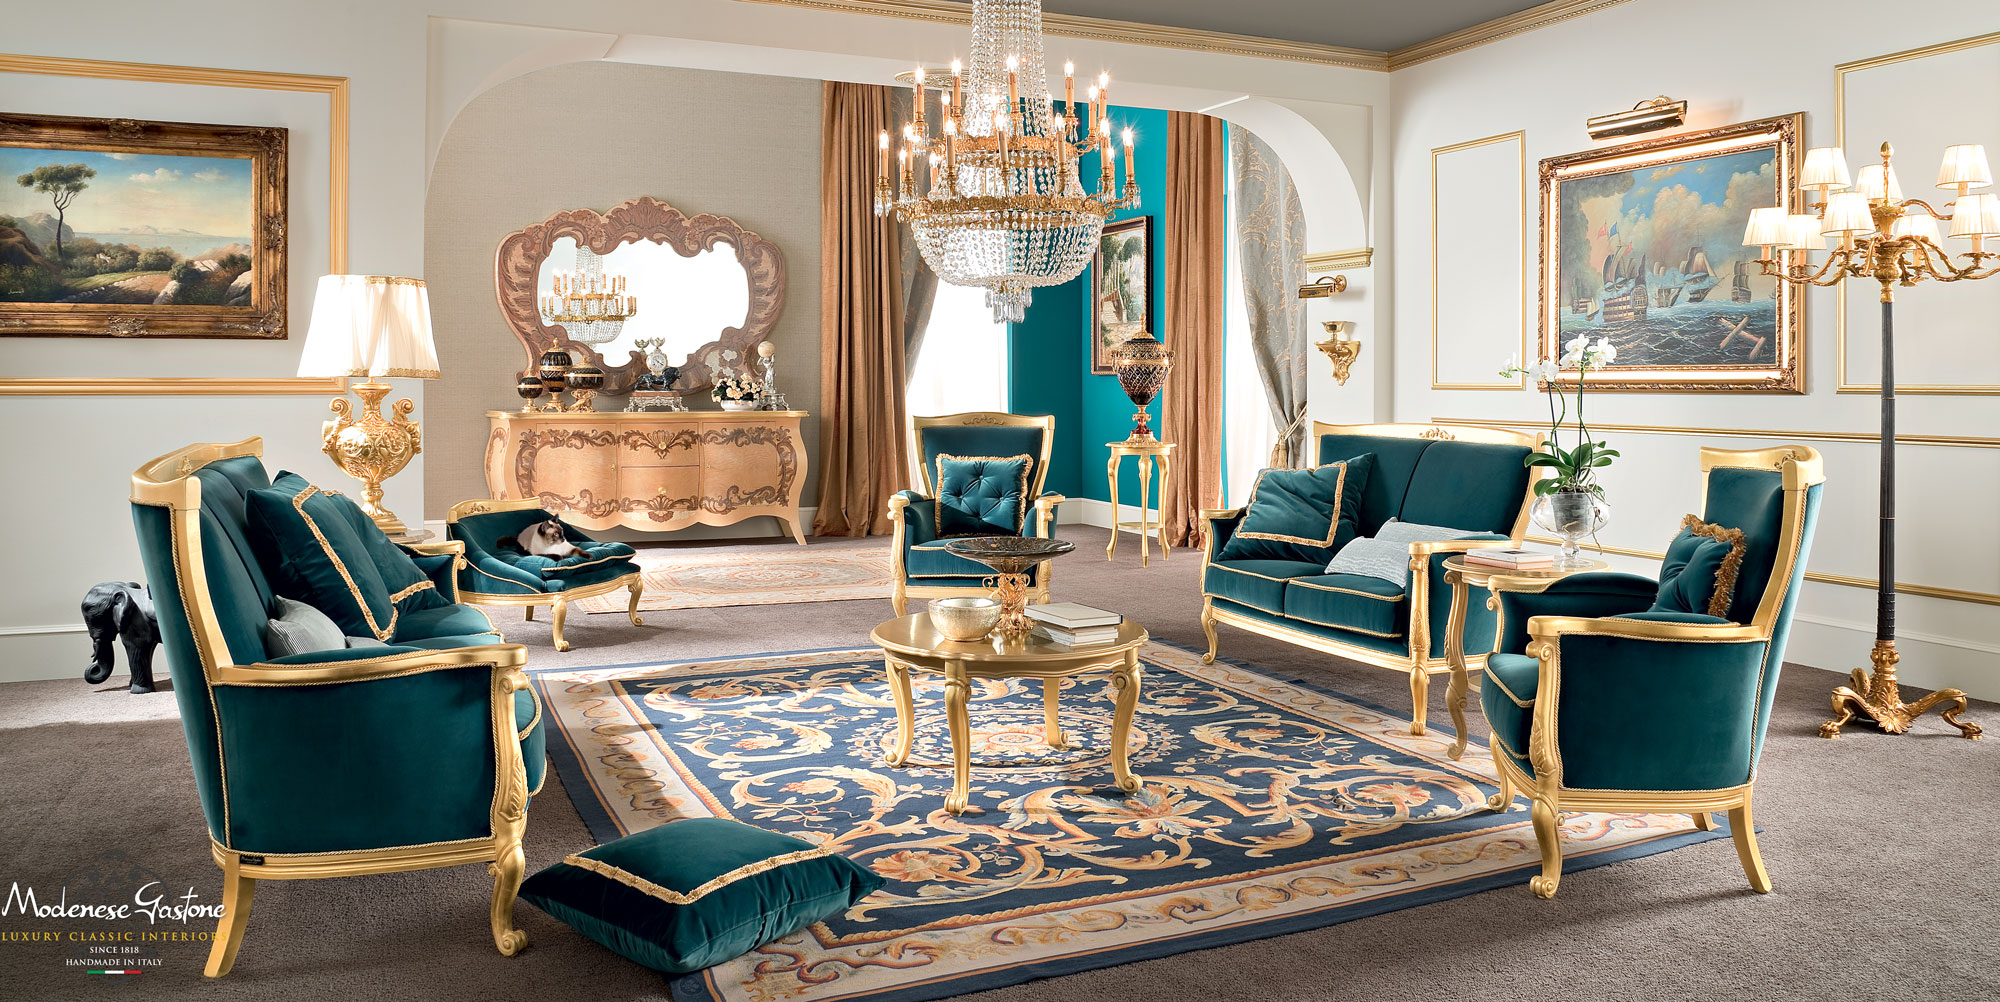 Modenese Gastone Luxury Interiors